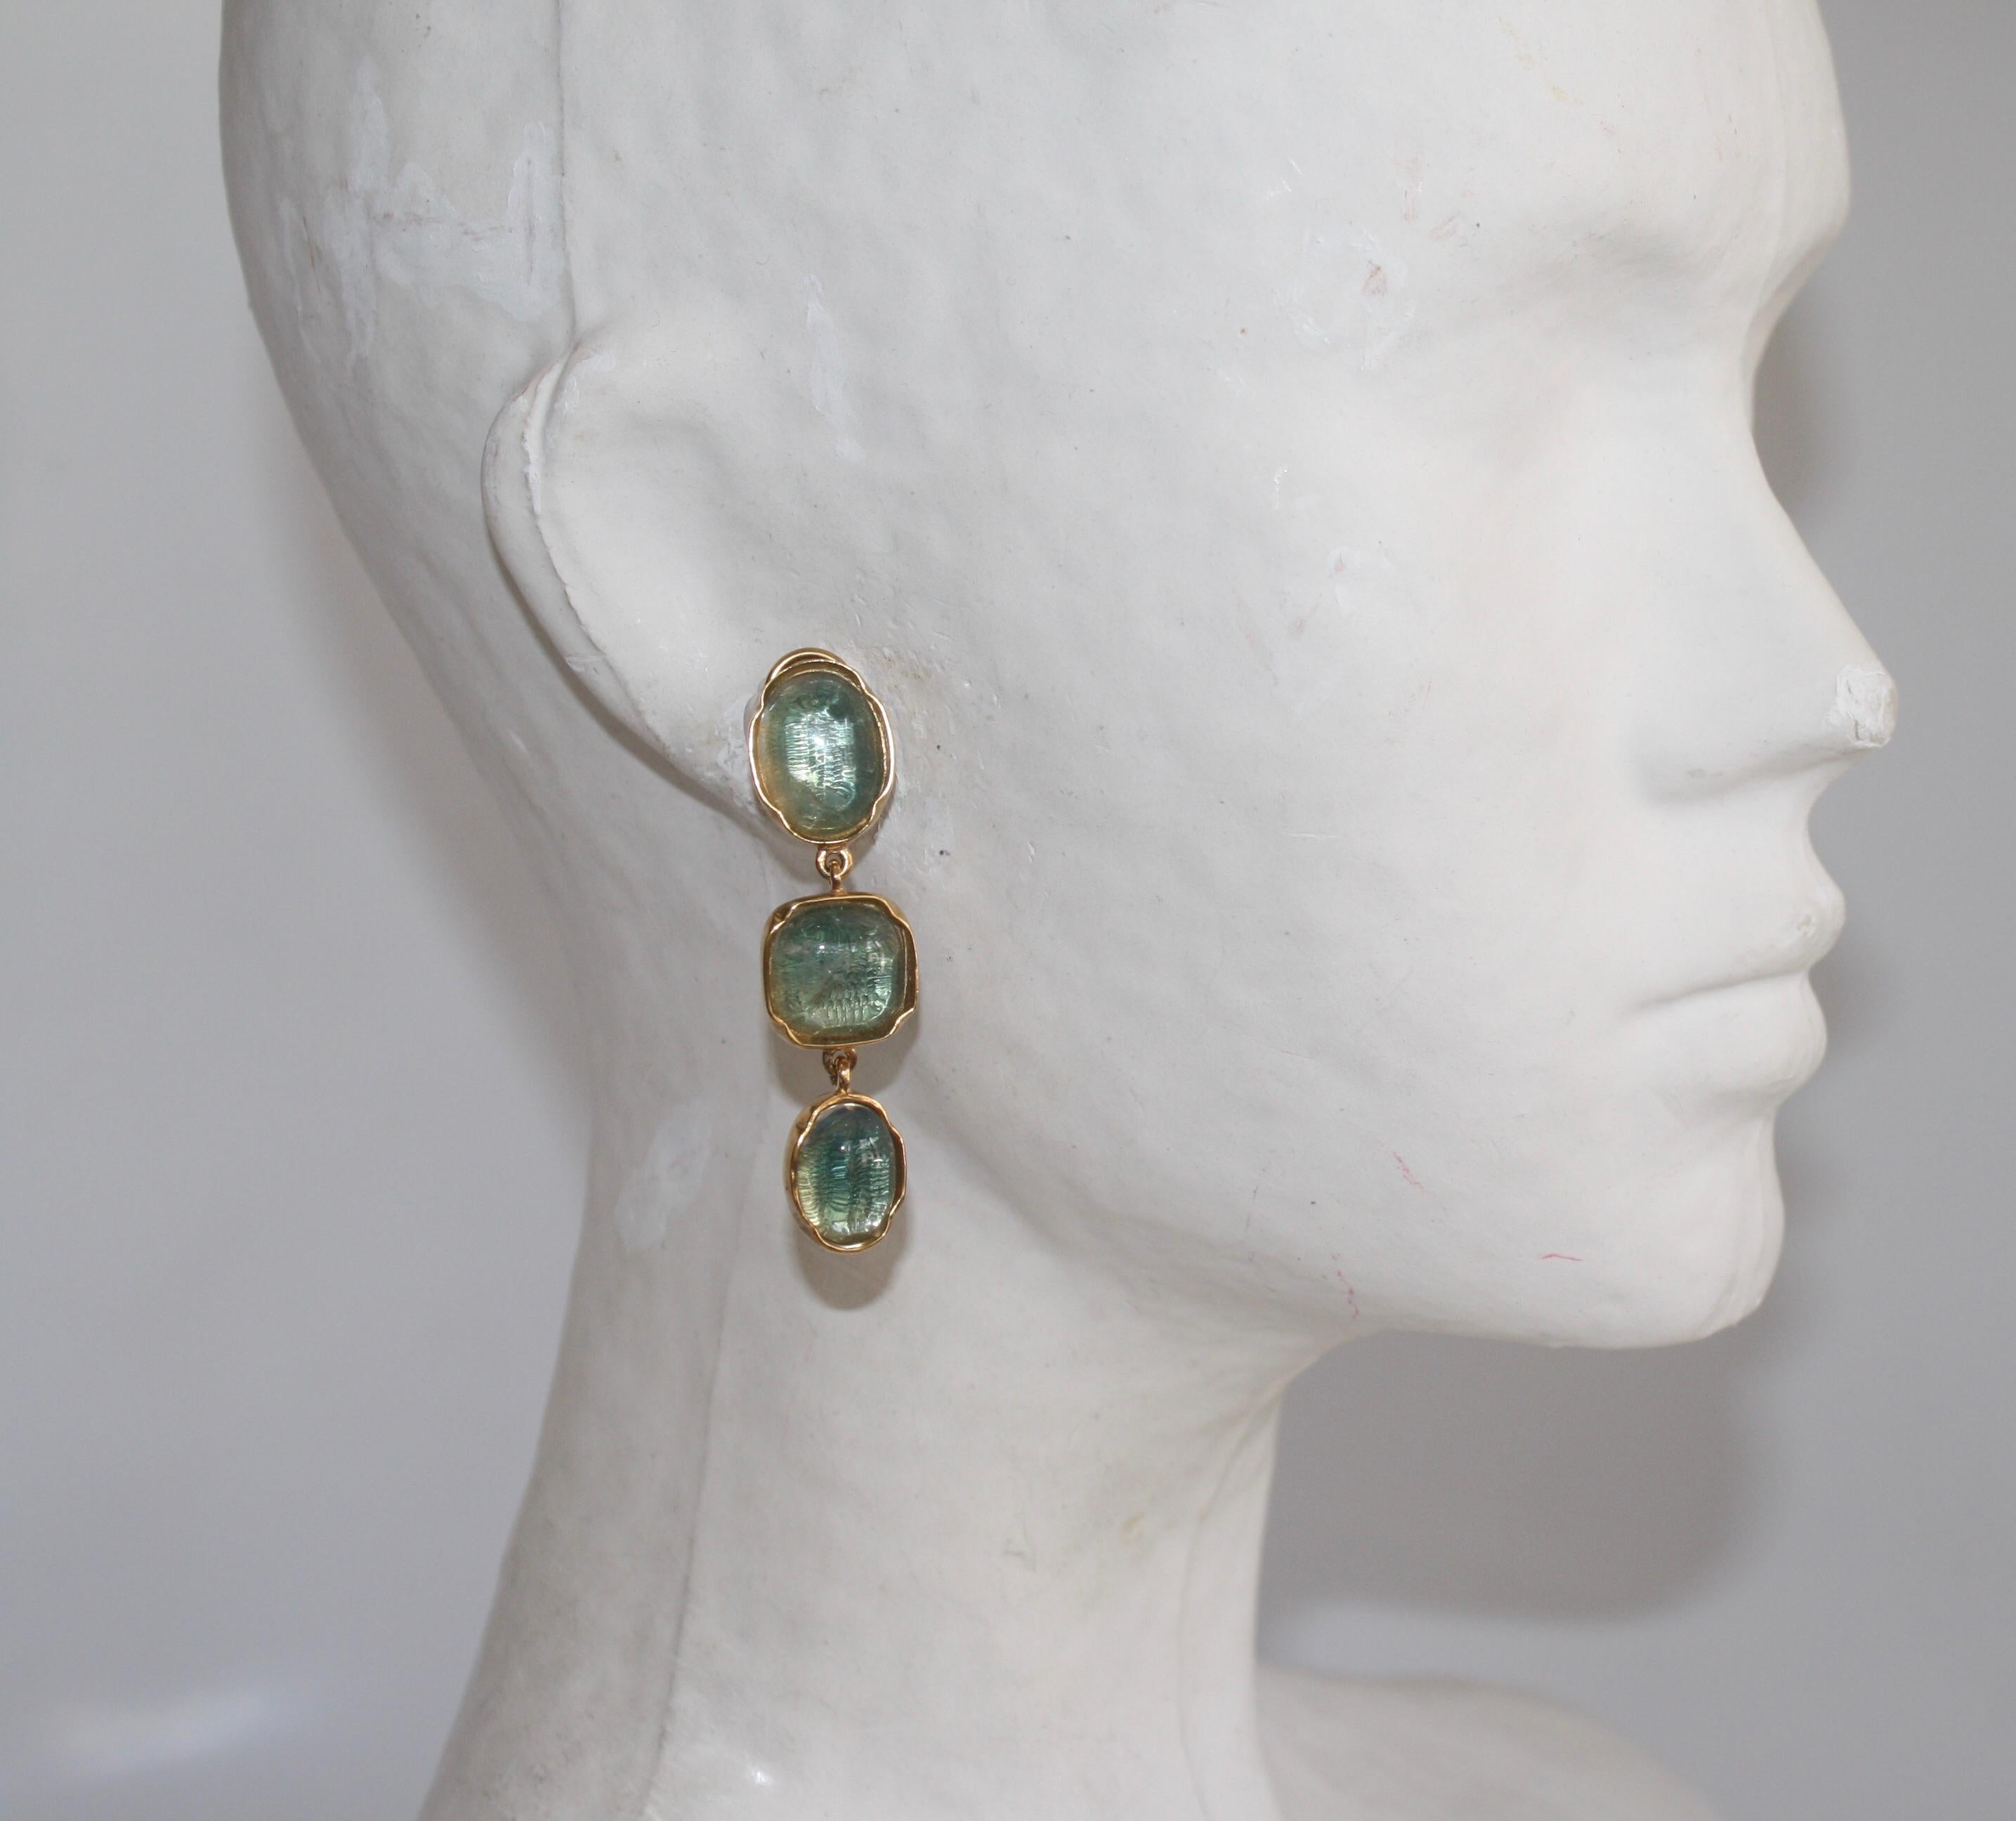 Hand tinted blue rock crystal triple drop clip earrings from Goossens Paris. Set in 24 karat gold plate. 